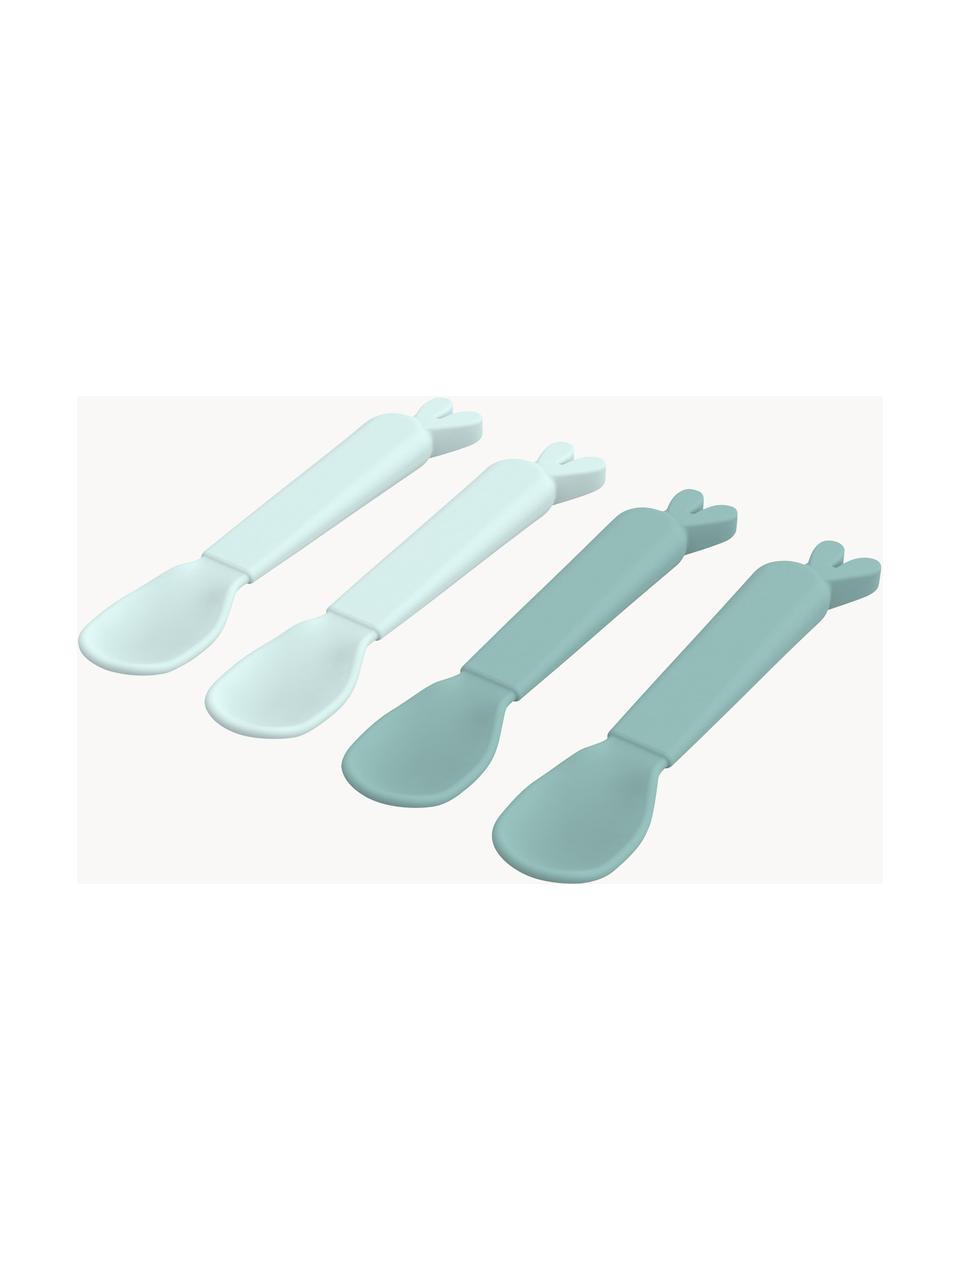 Set de cucharas Kiddish, 4 uds., Plástico, Tonos azules, L 13 cm